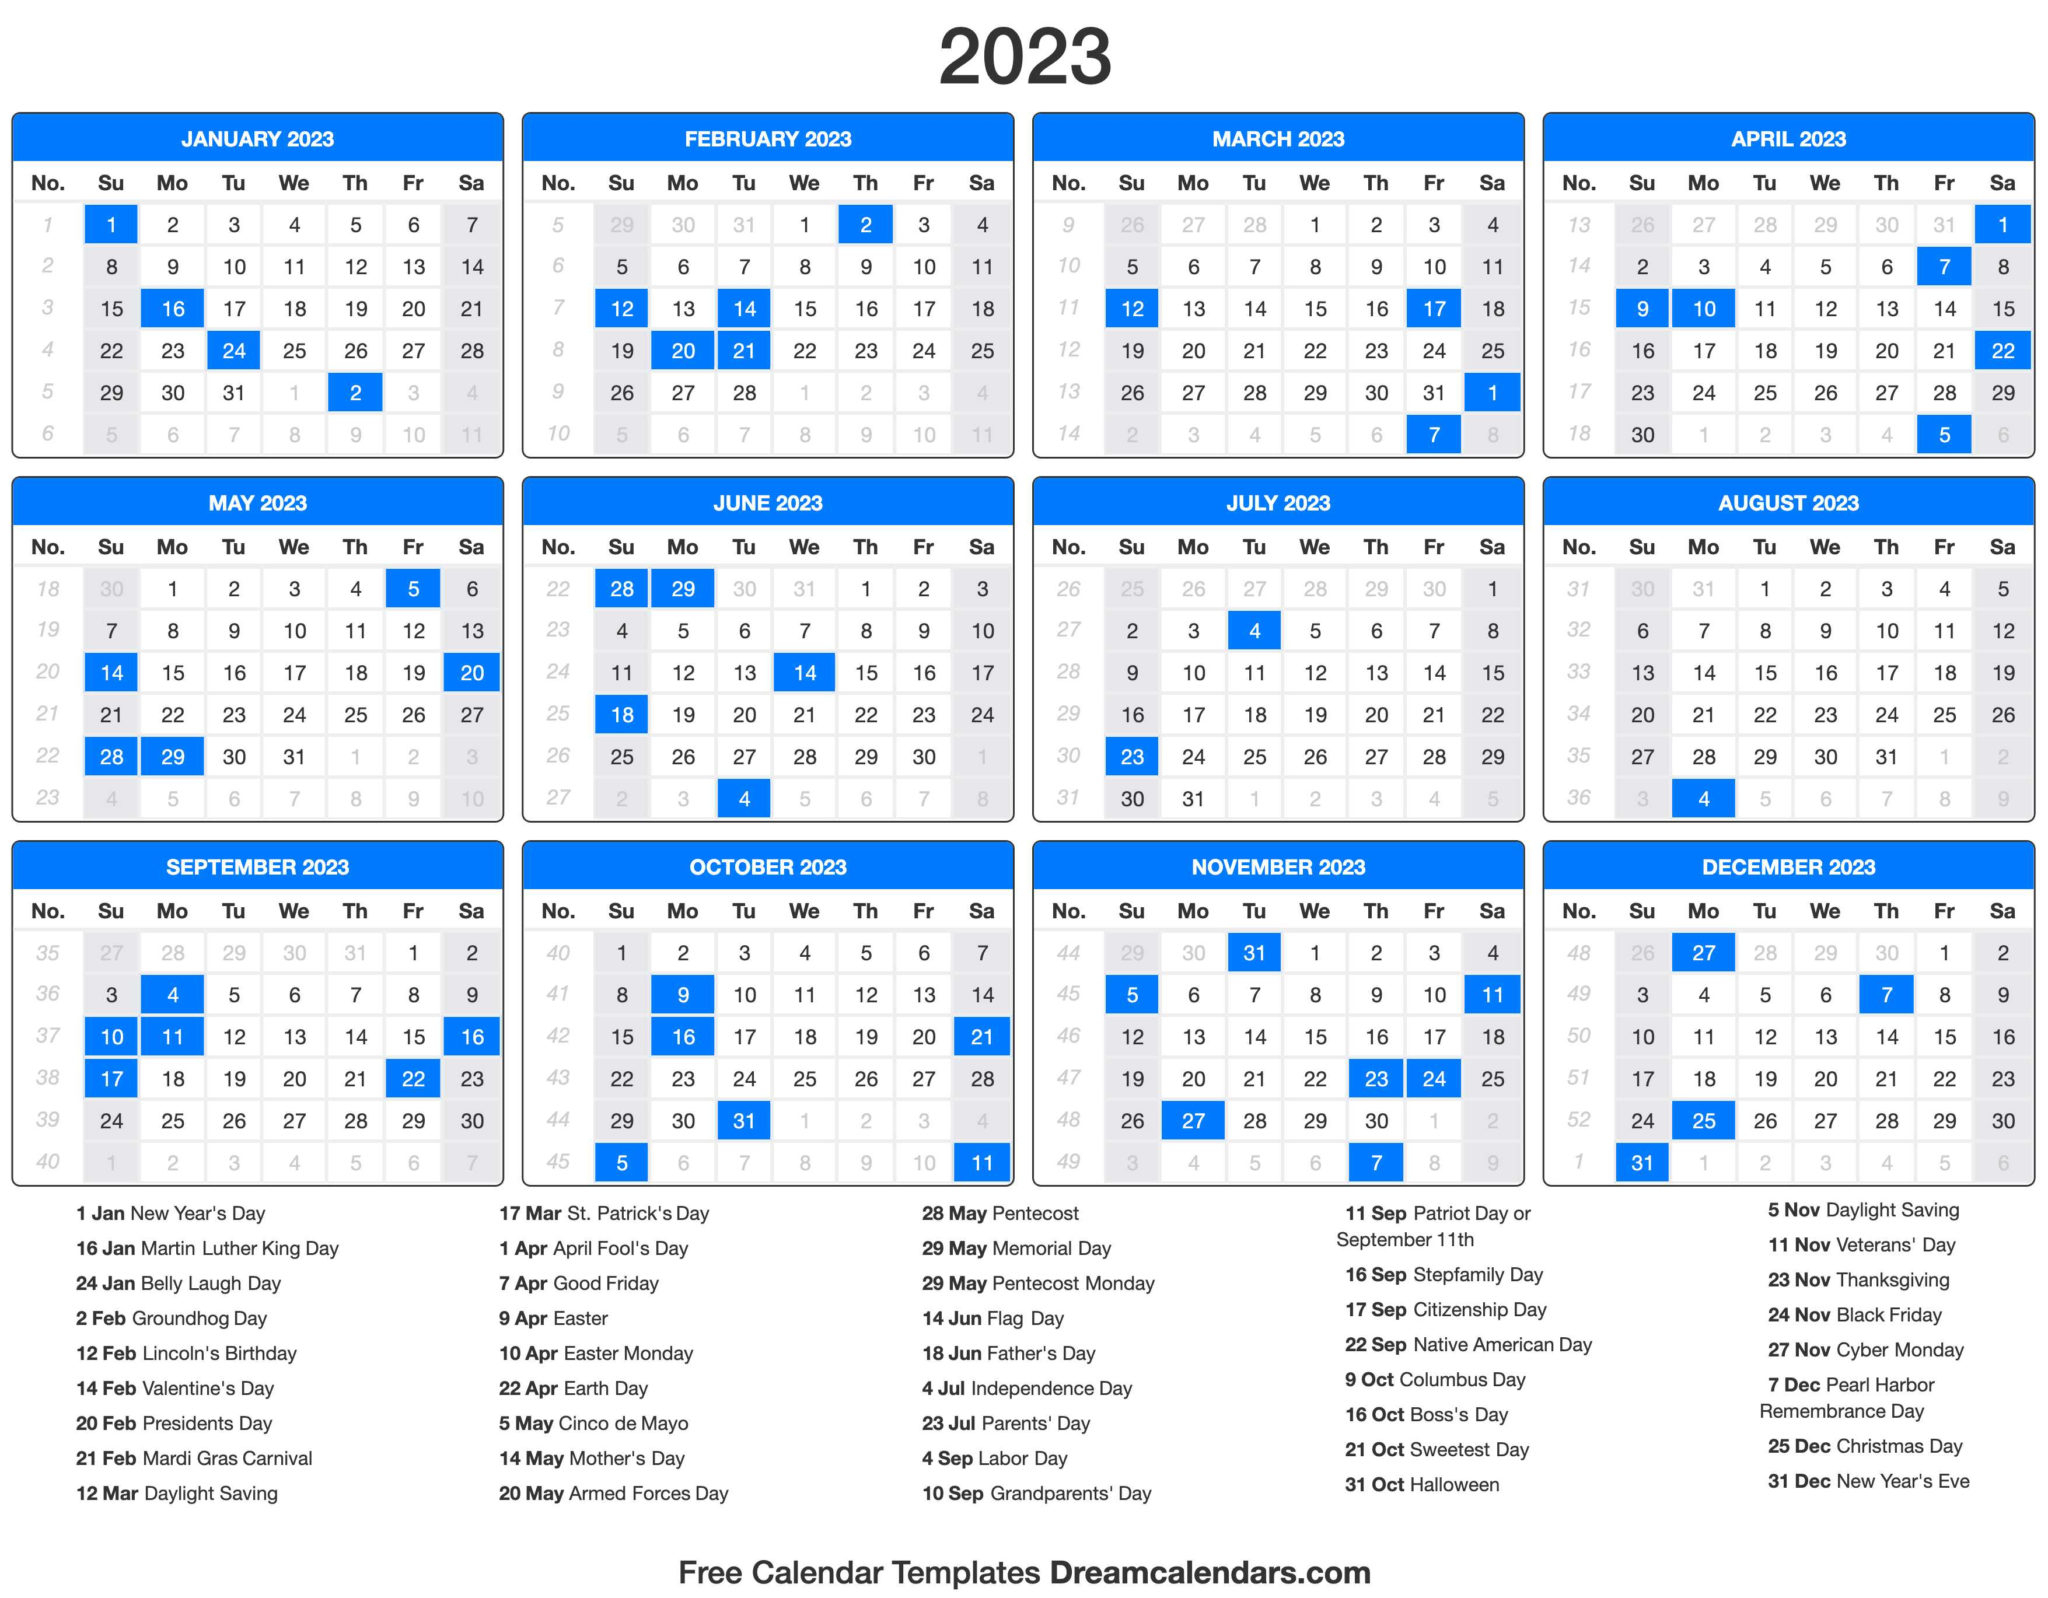 Jewish Calendar 2023 Pdf Customize And Print